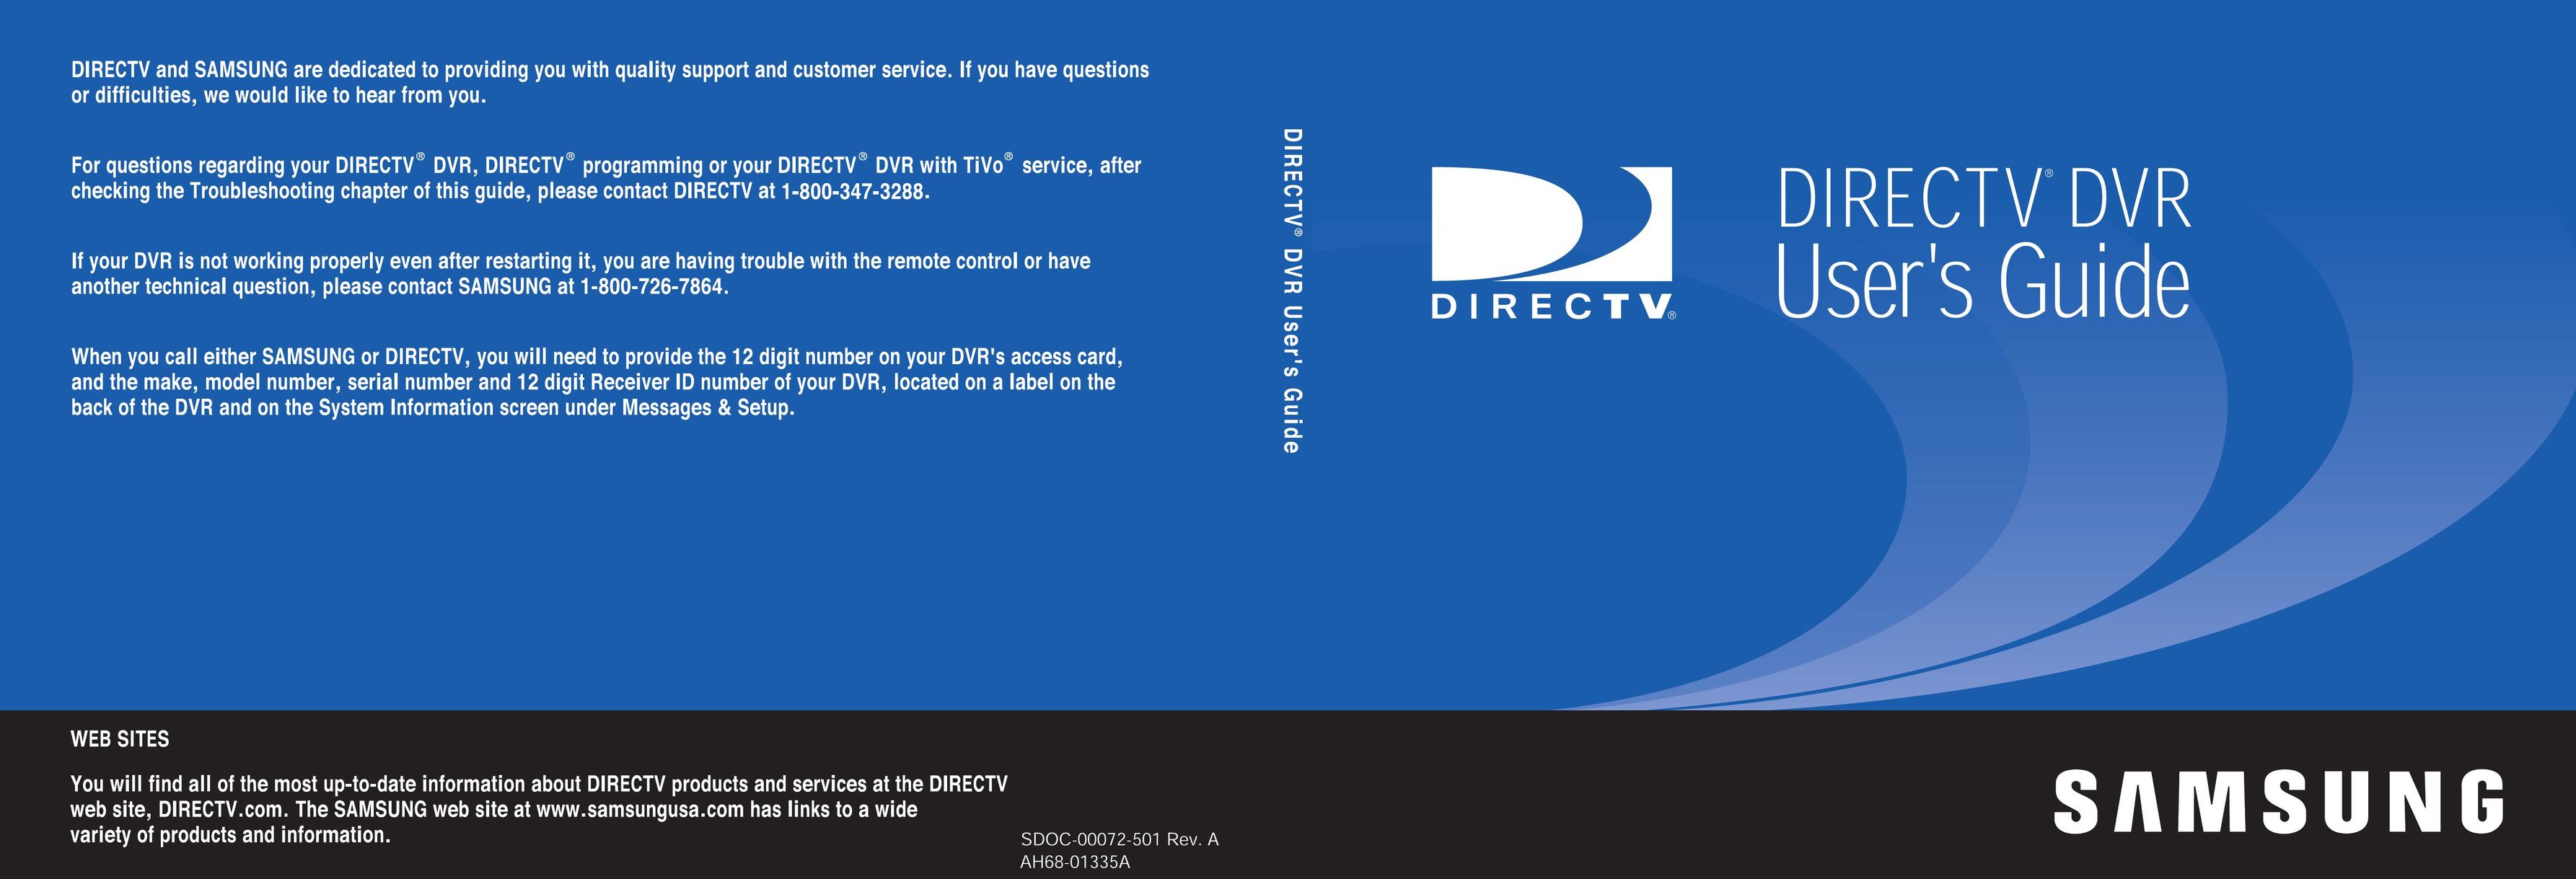 Samsung SIR-S4040R Satellite TV System User Manual